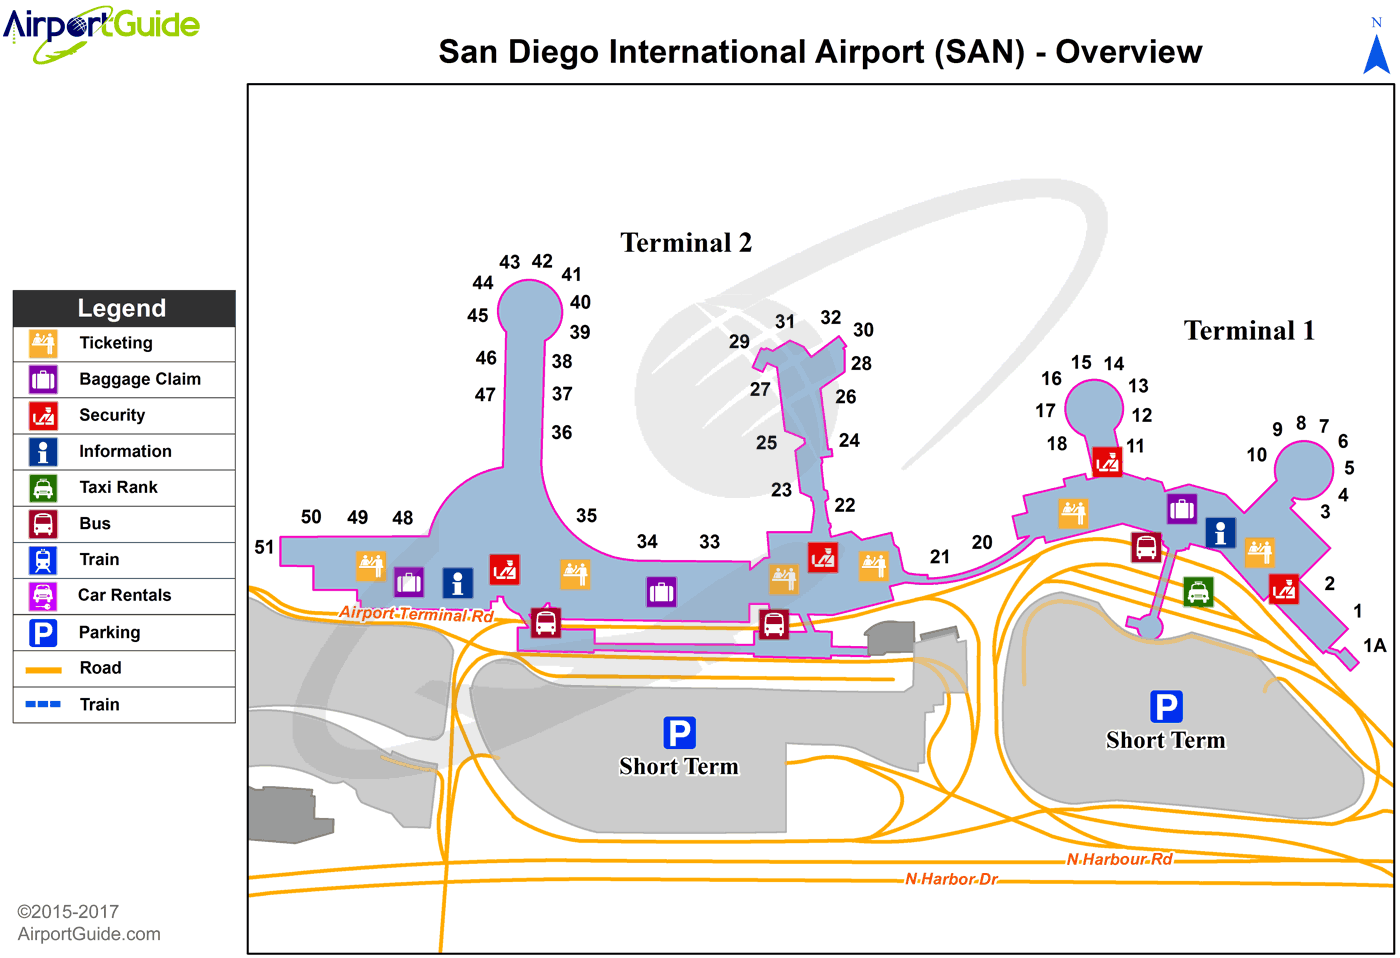 San Diego - Fullerton Municipal (SAN) Airport Terminal Map - Overview